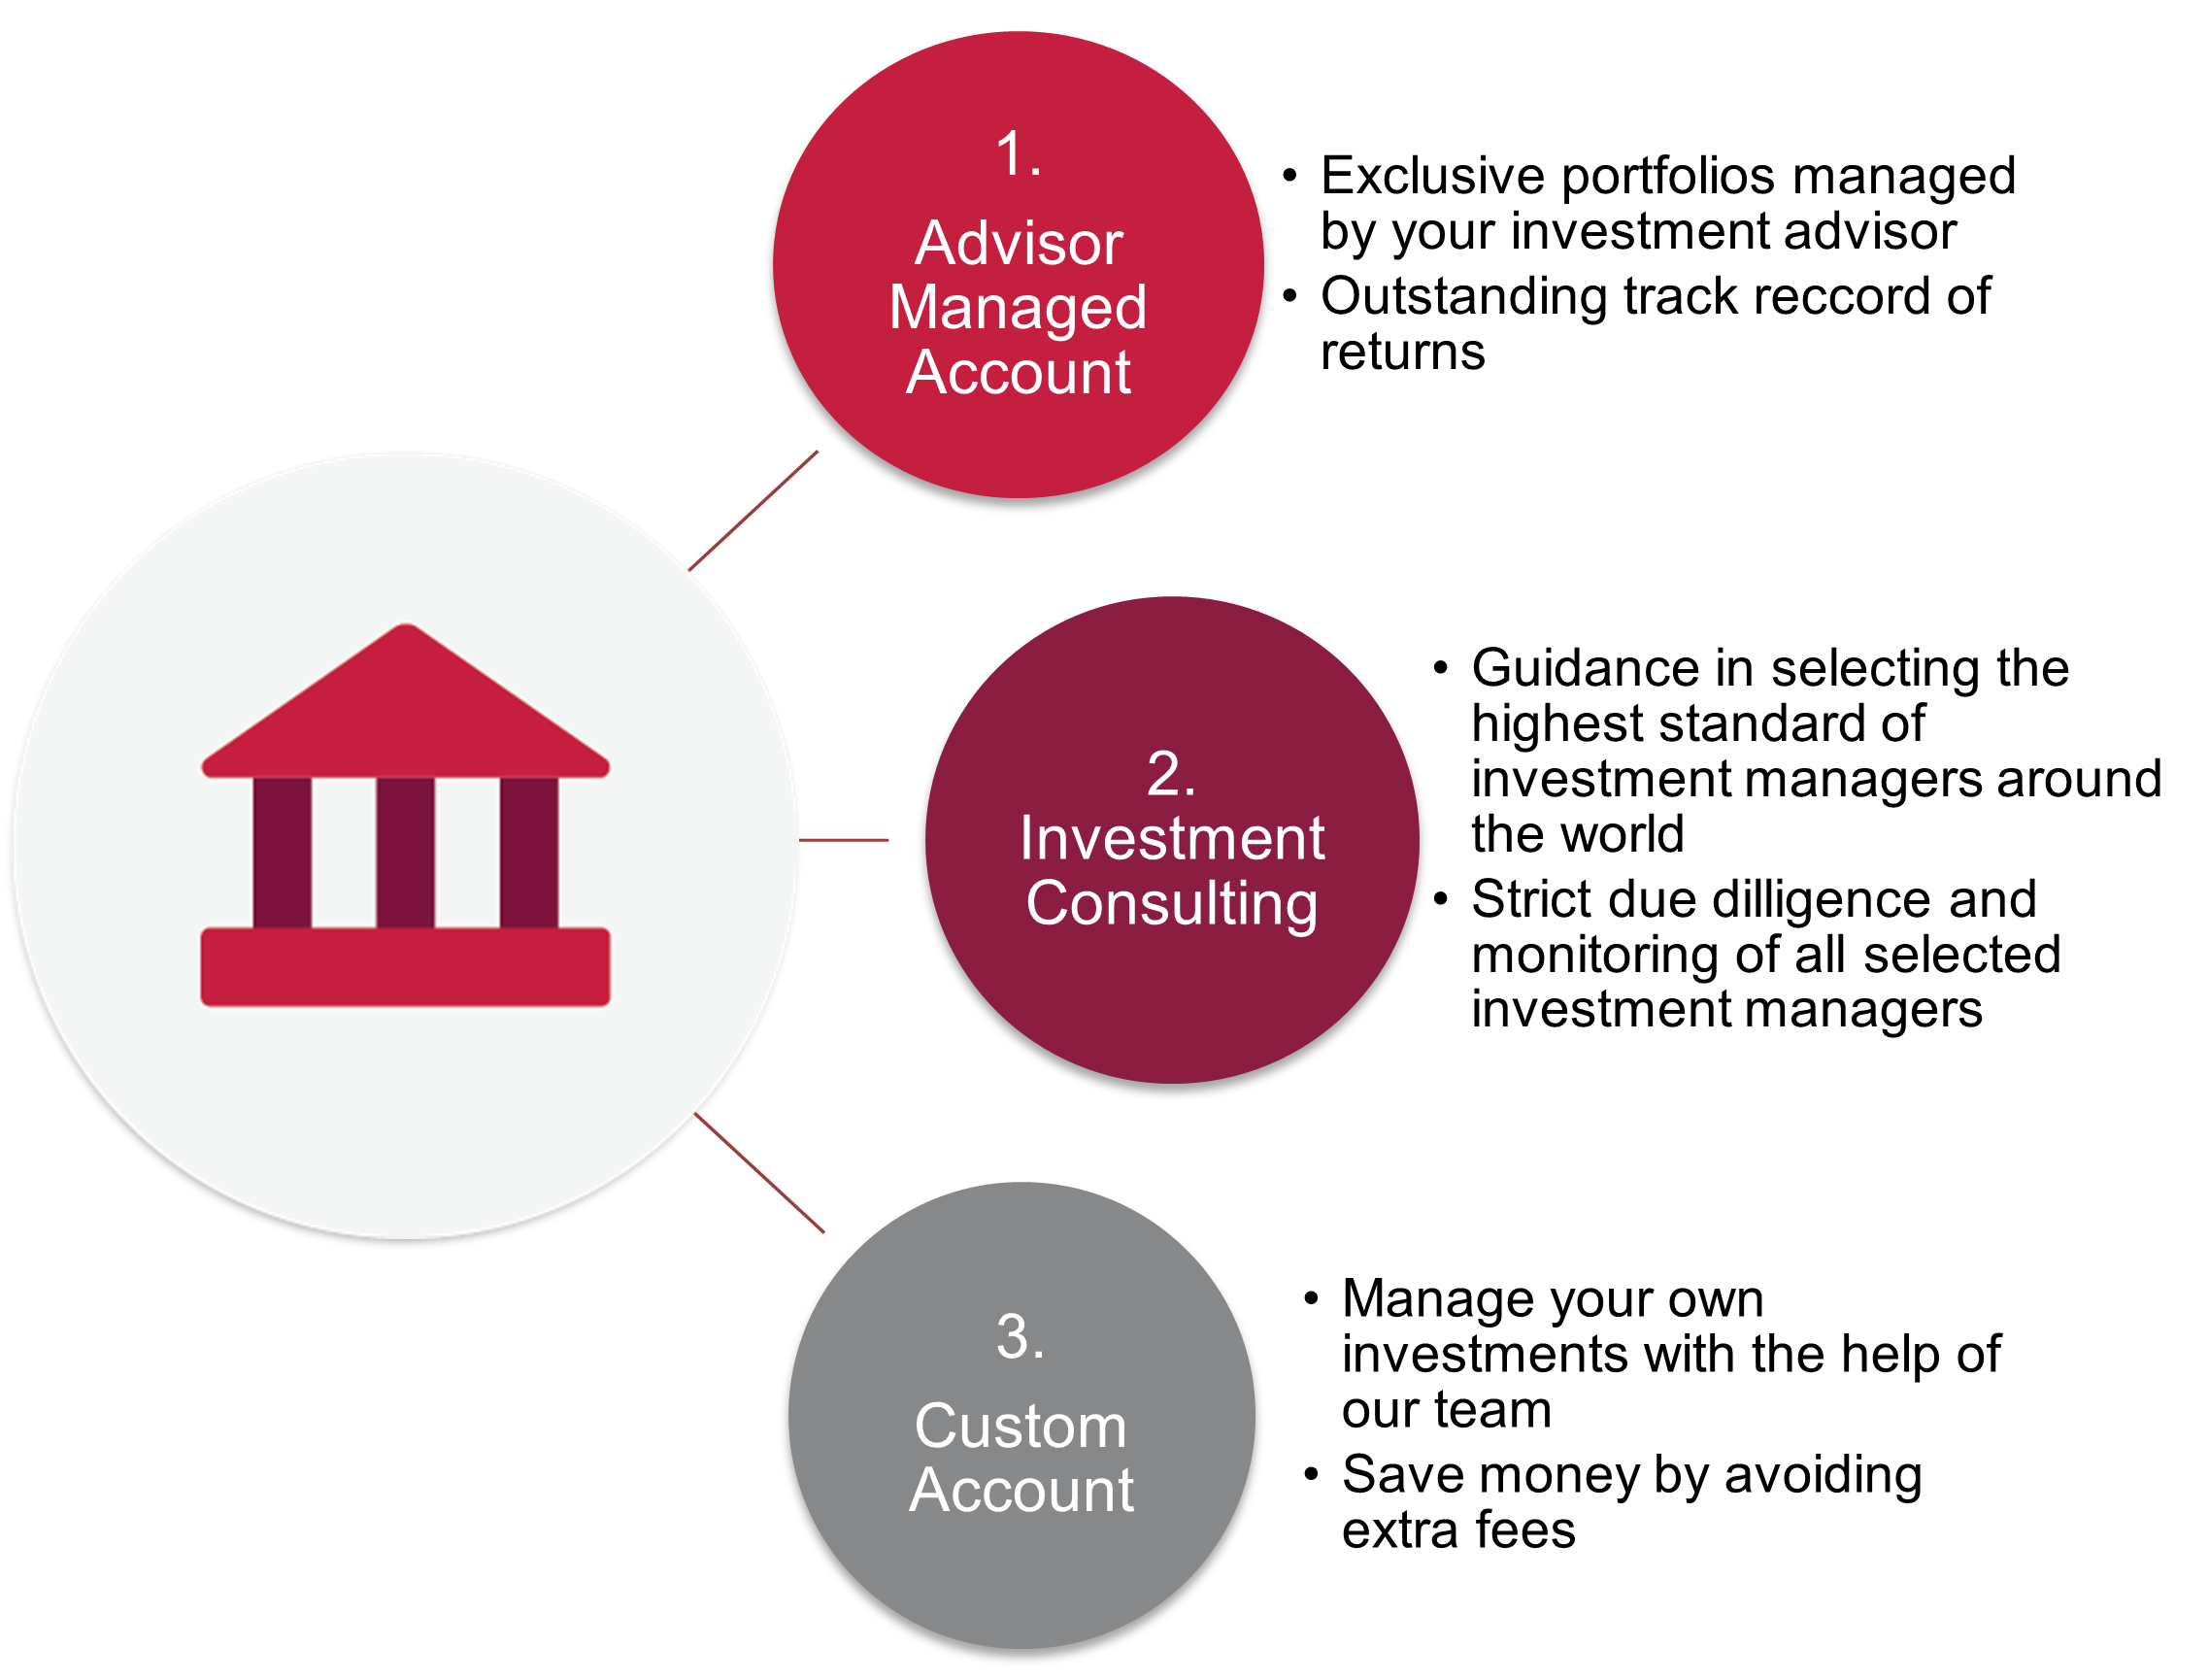 The Three Pillars: Advisor Managed Account, Investment Consulting, Custom Account